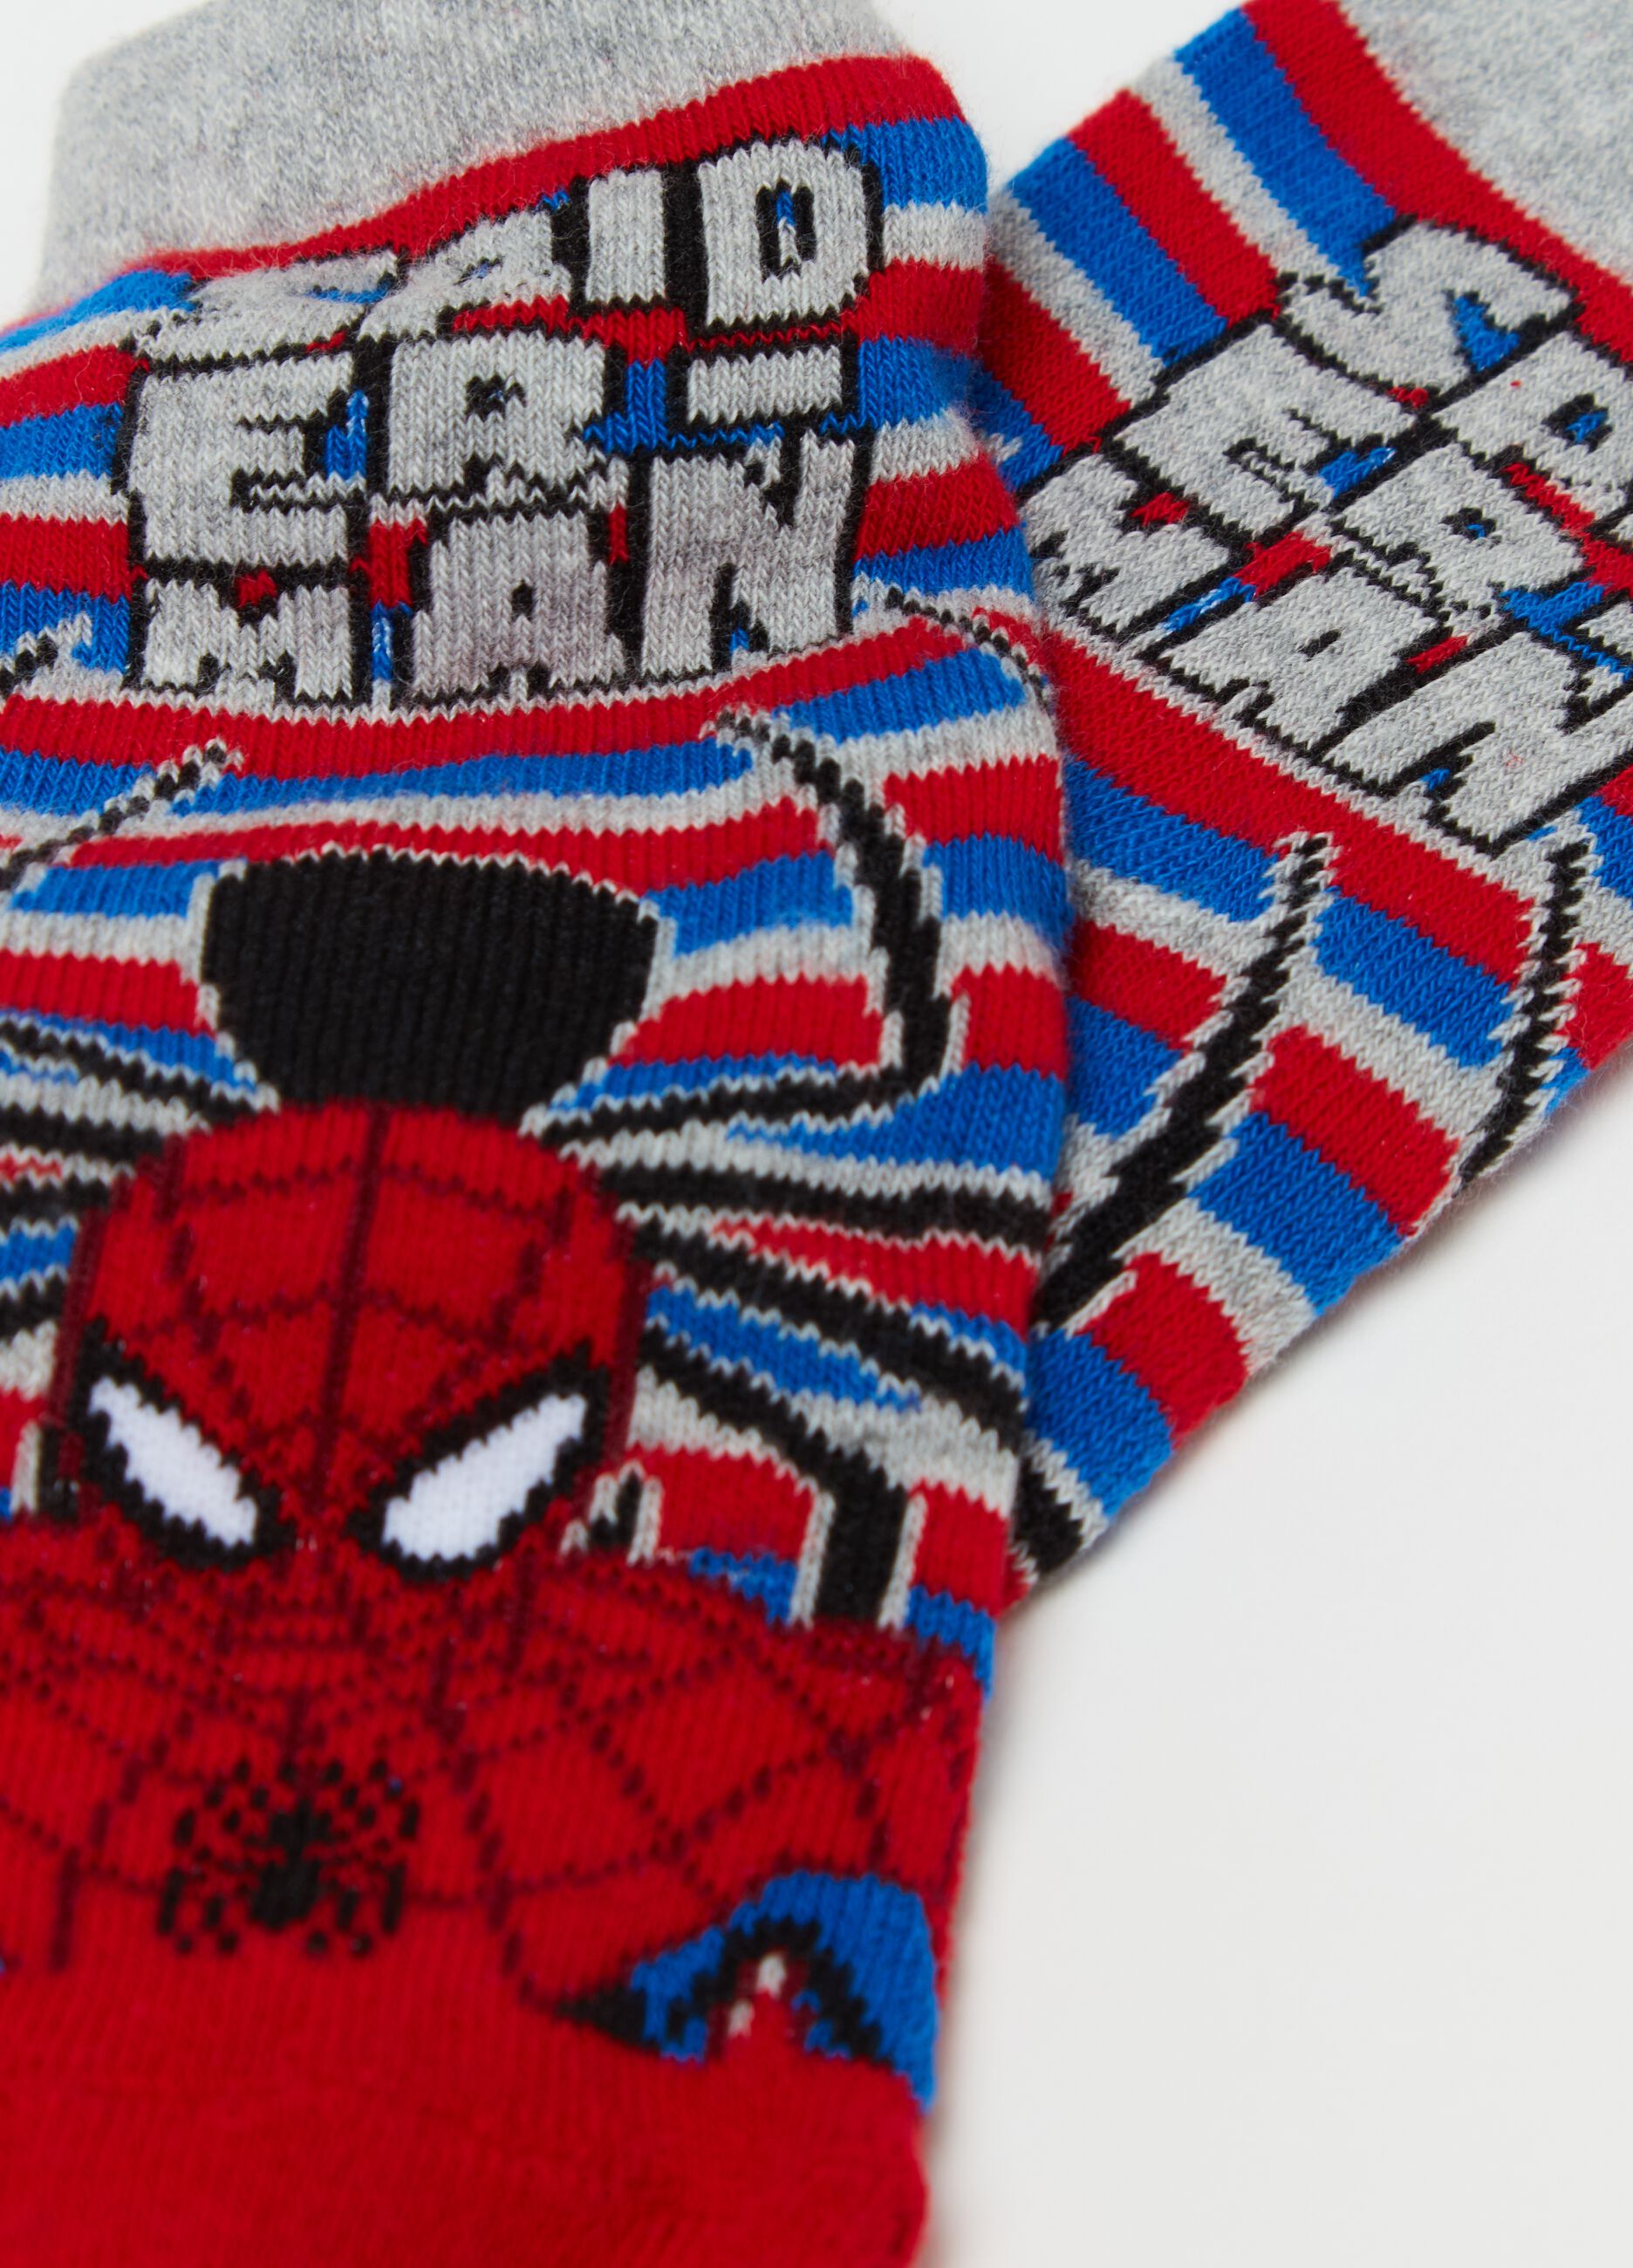 Calze antiscivolo con disegno Spider-Man